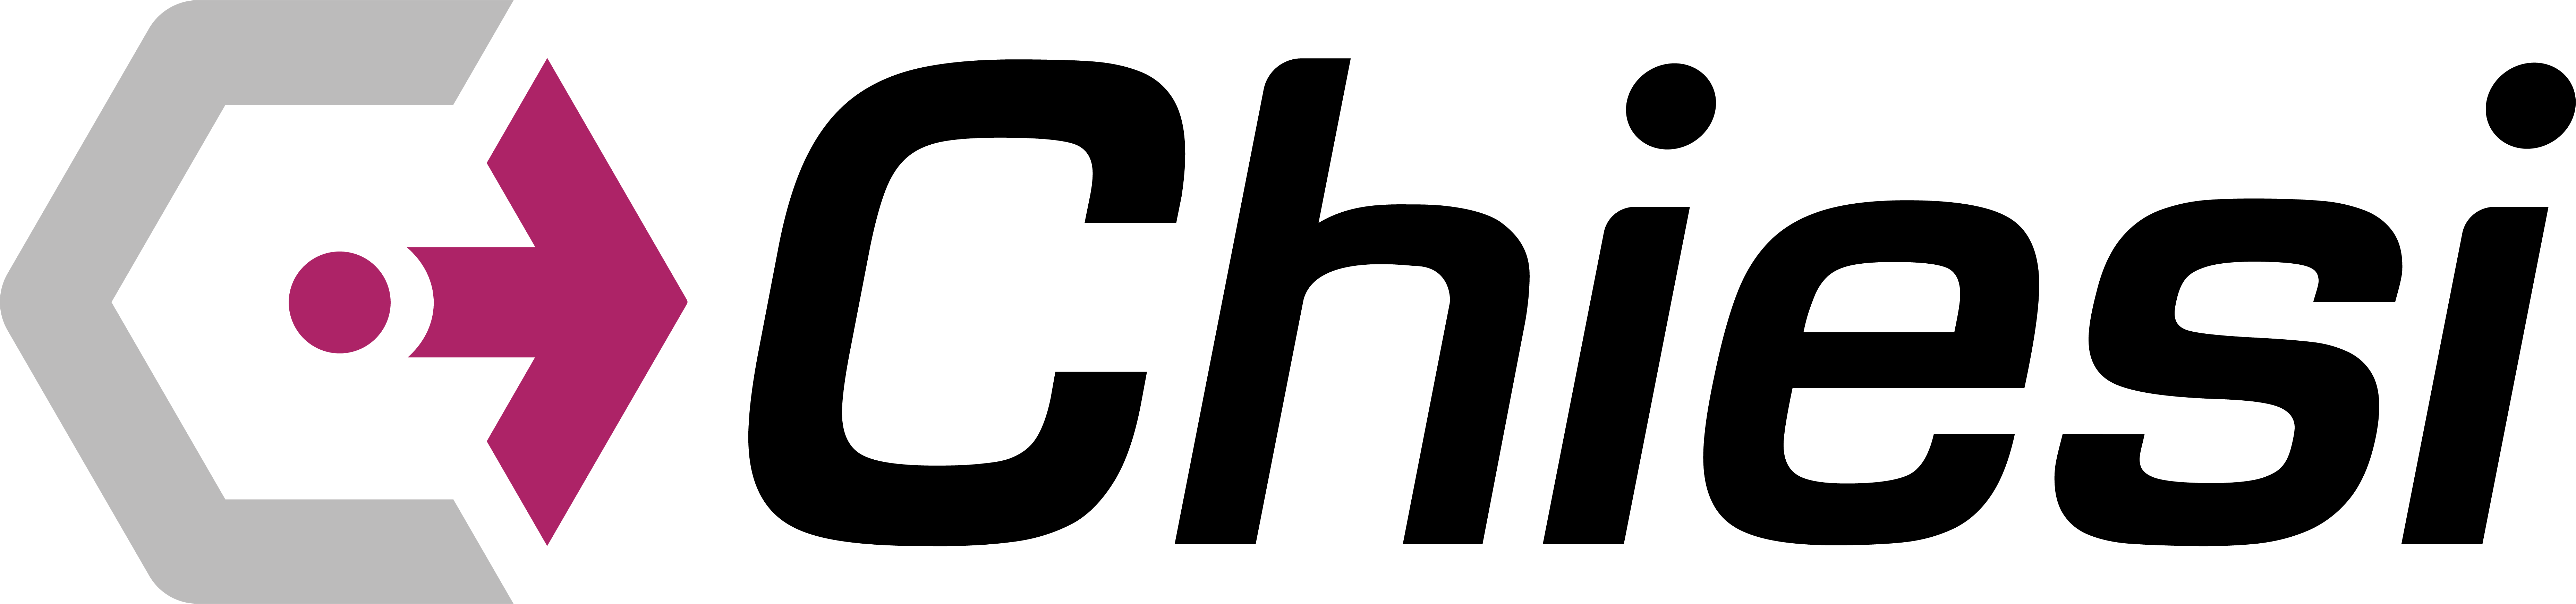 Grantor Chiesi Logo 1.Primary